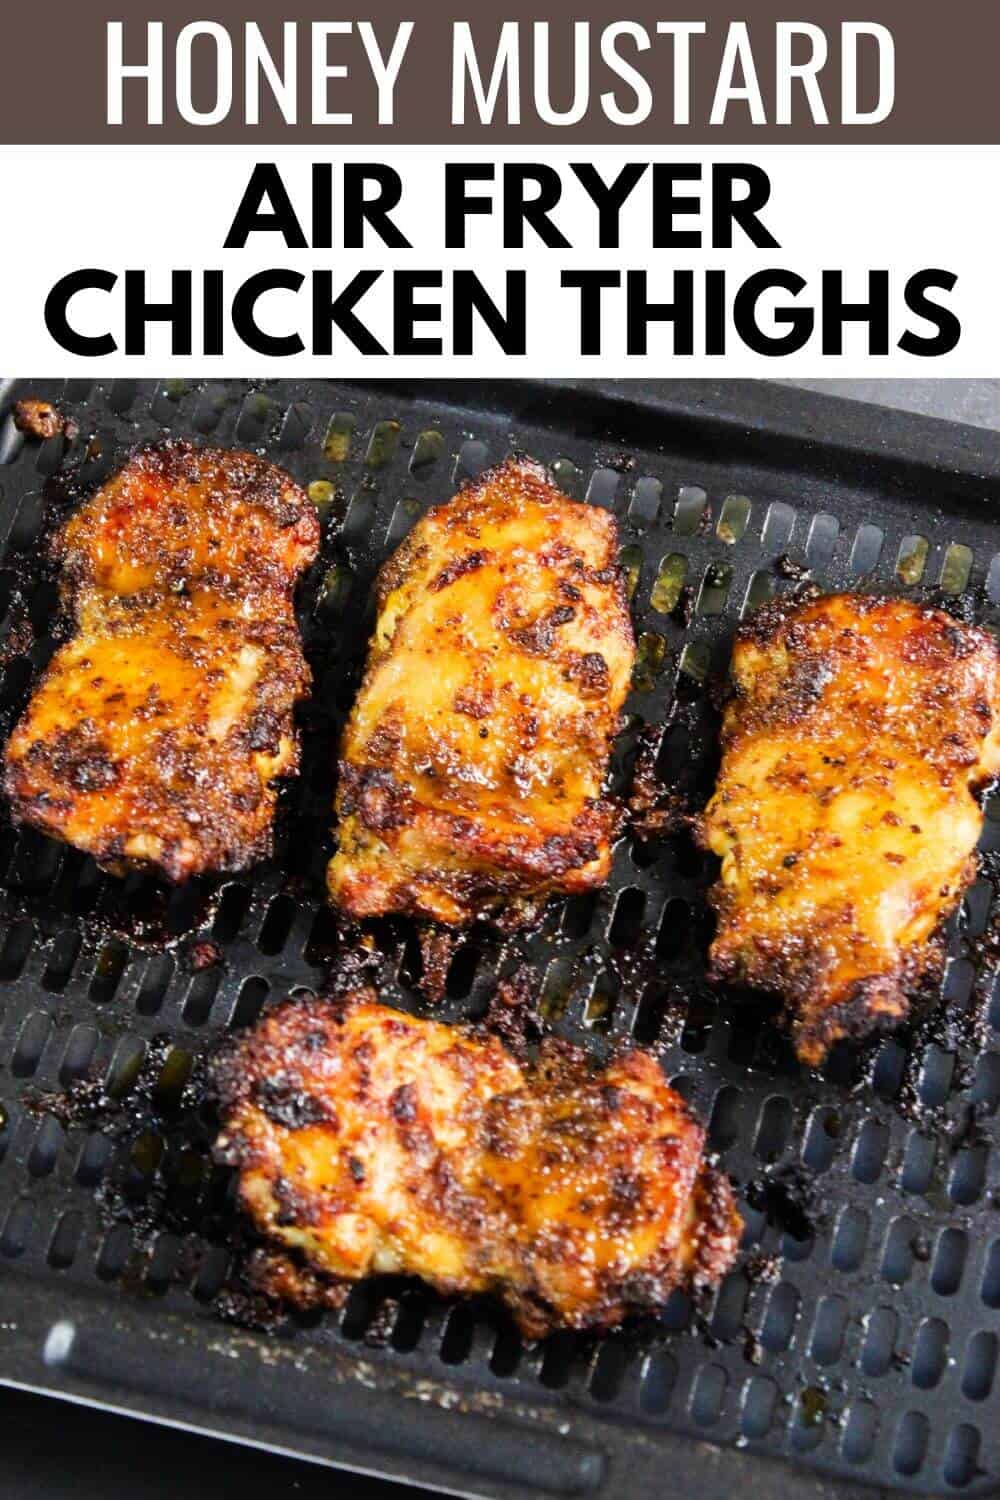 Air fryer boneless chicken thighs with honey mustard sauce.